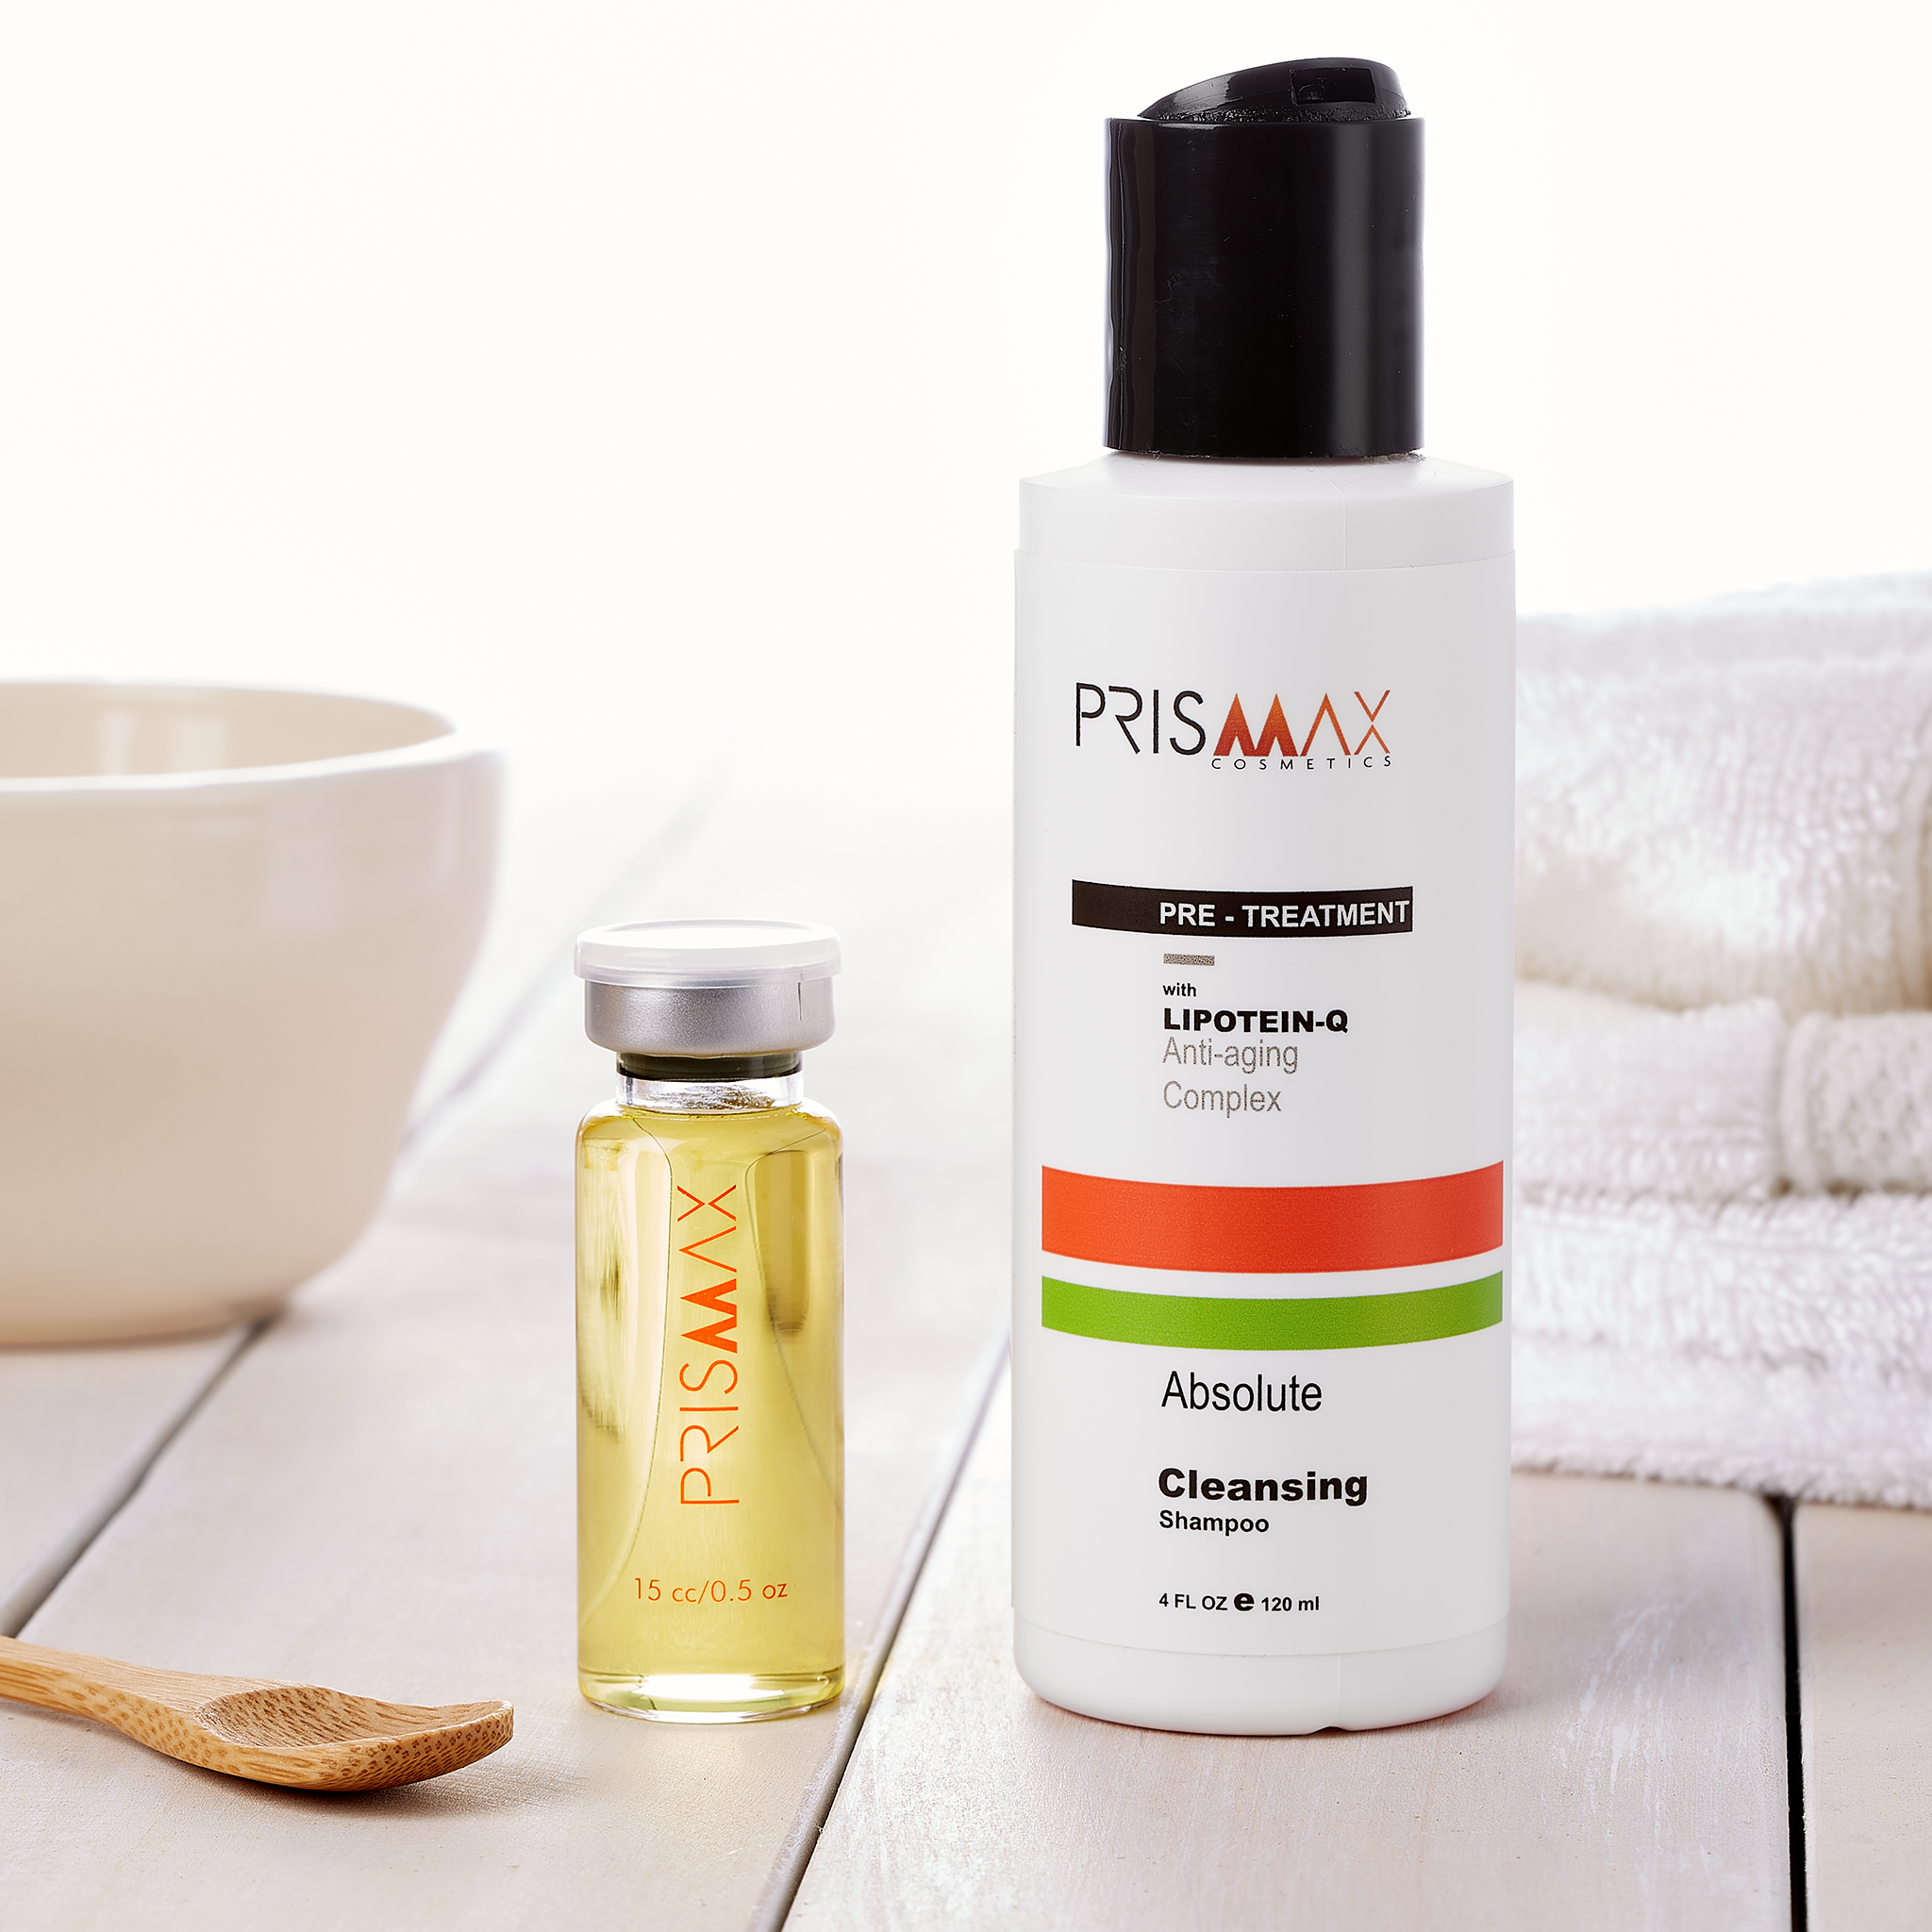 Prismax Clarifying Shampoo